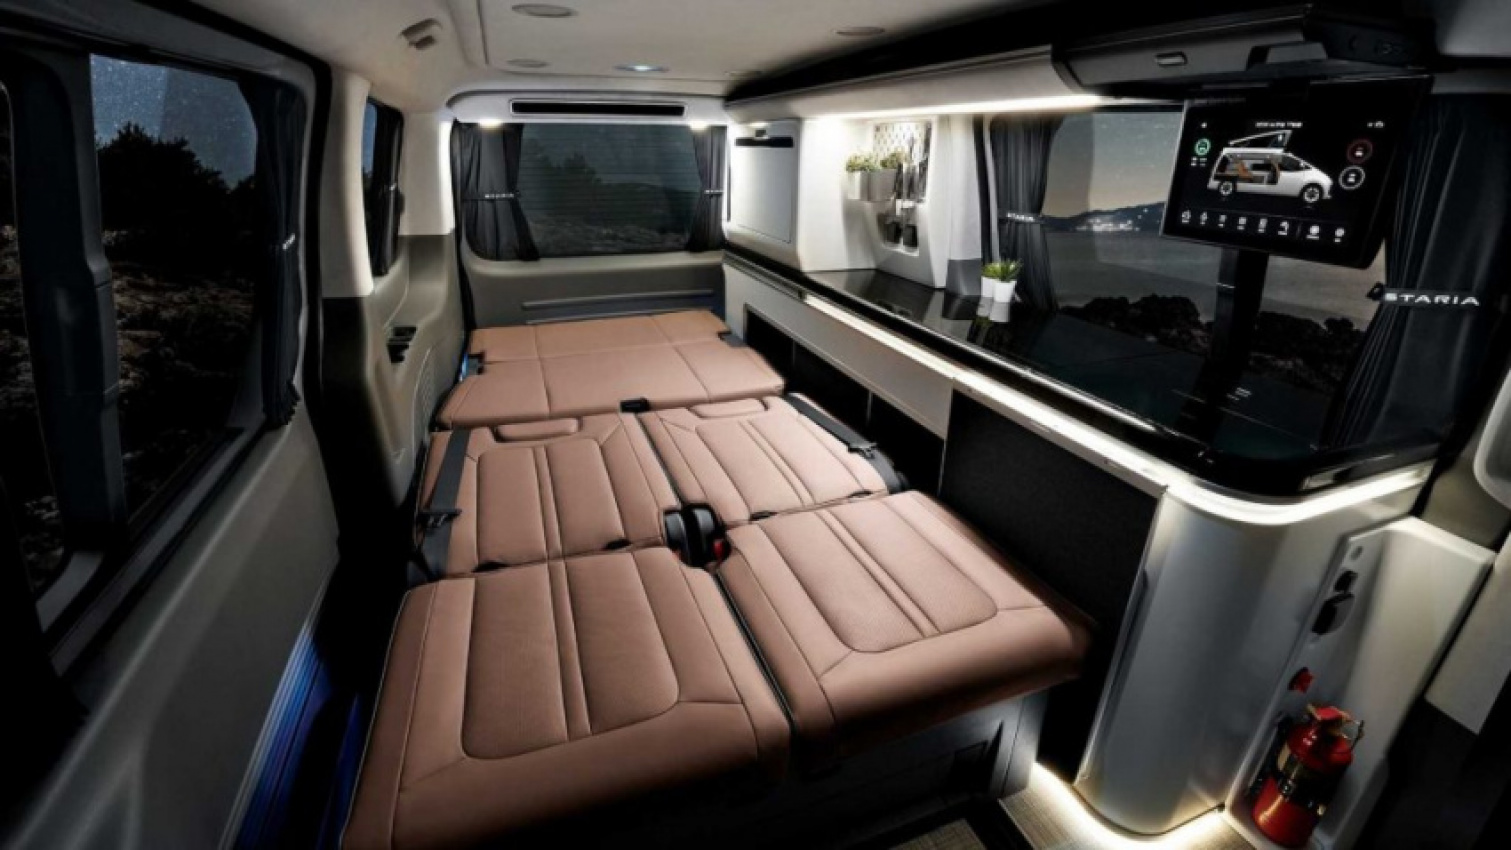 autos, cars, hyundai, camper van, luxury cars, minivan, hyundai staria lounge camper: fancy forbidden camper van